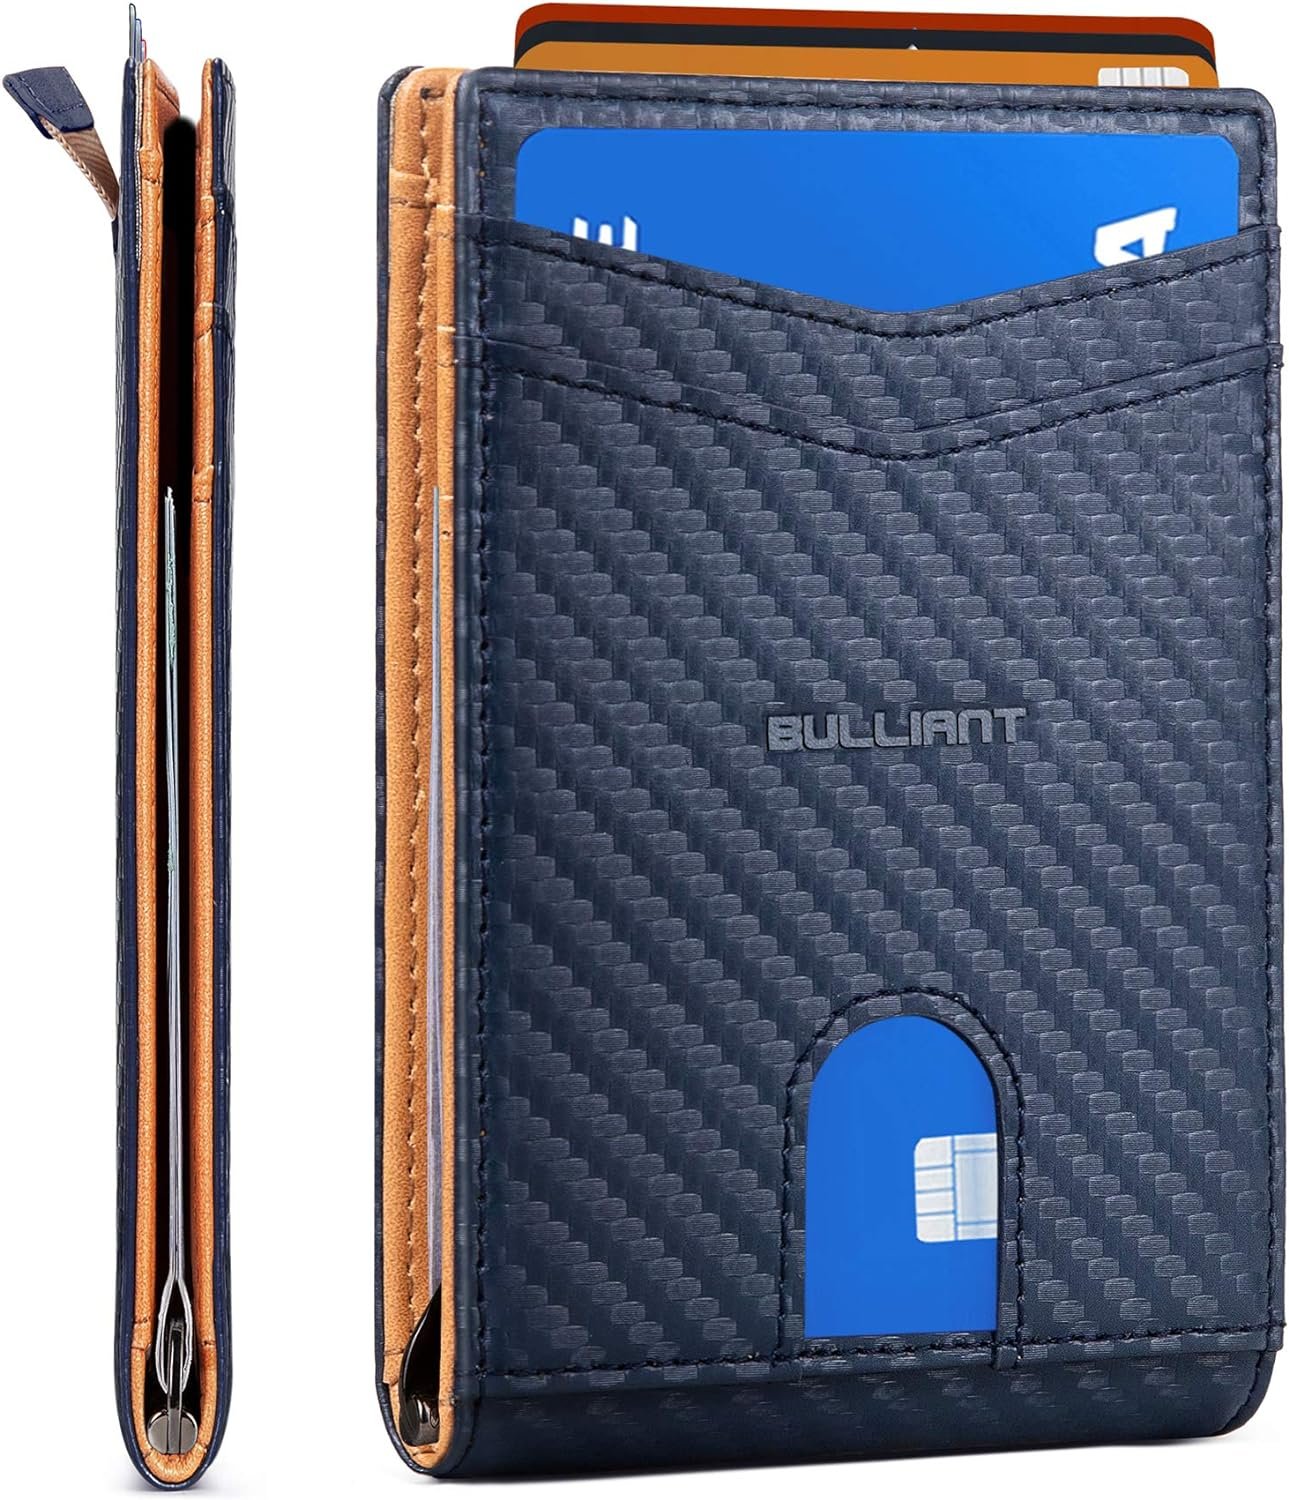 BULLIANT Slim Wallet Front Pocket Review